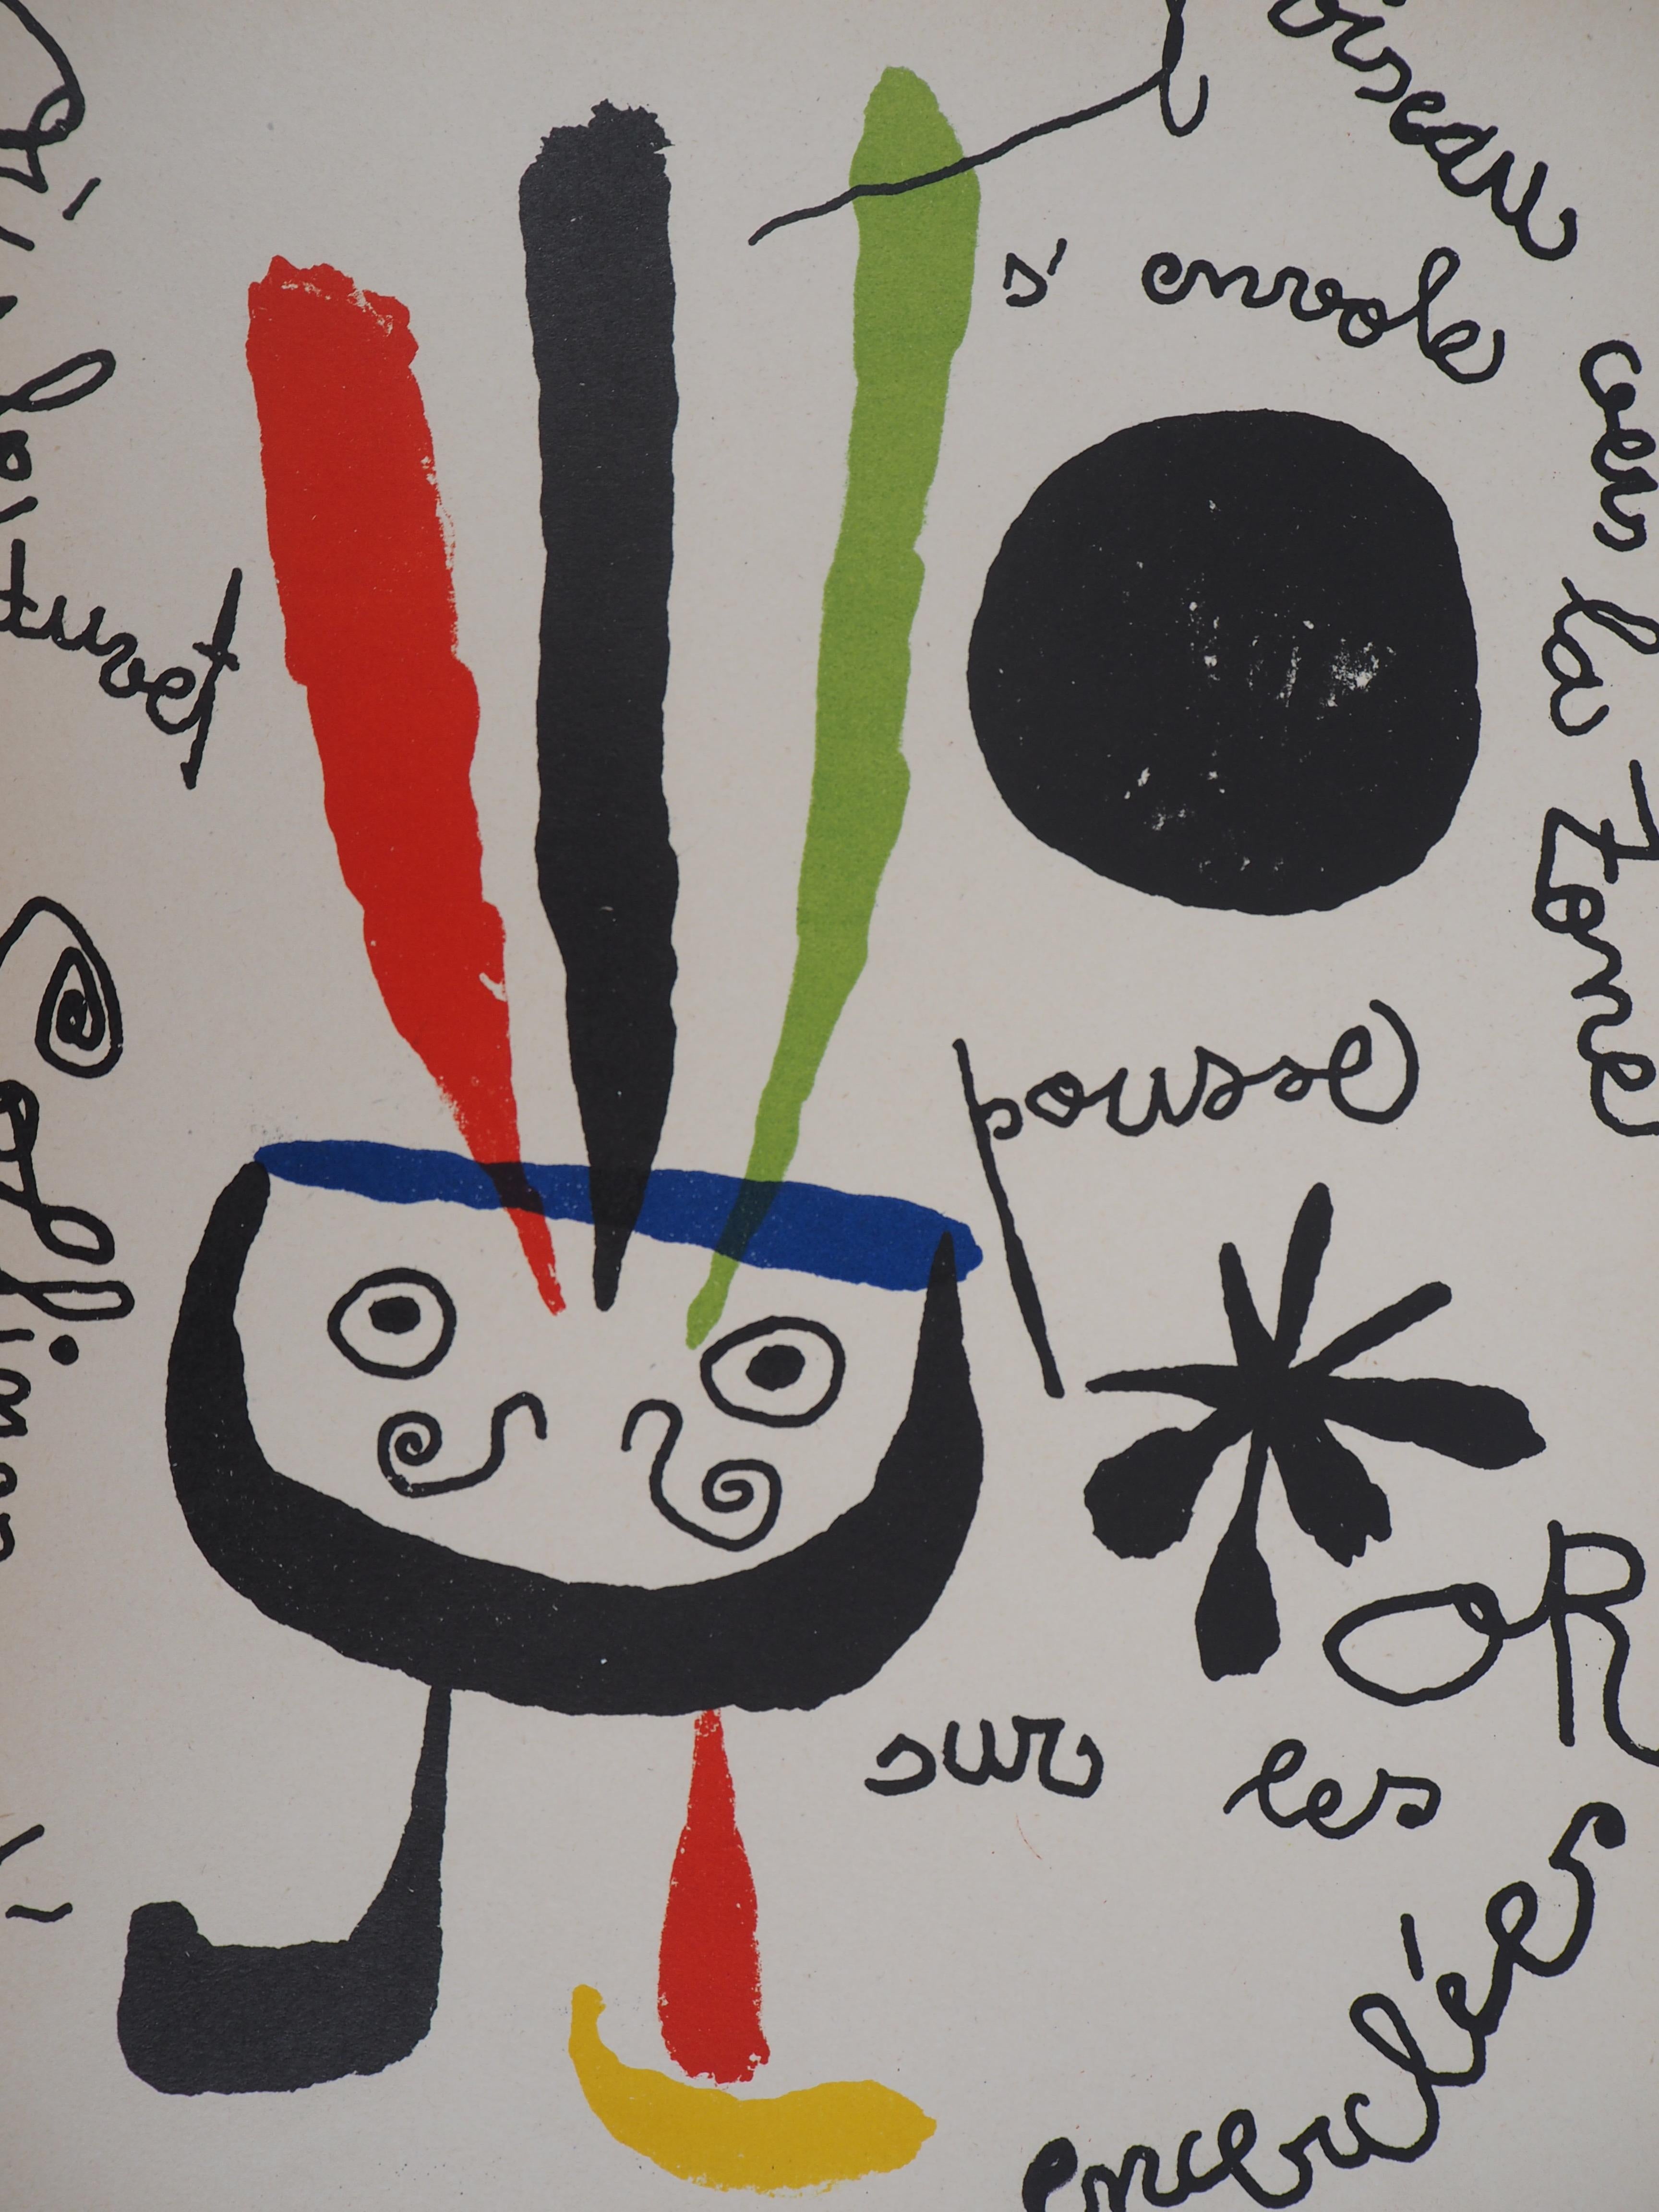 The Bird - Original lithograph - (Mourlot #185) - Print by Joan Miró